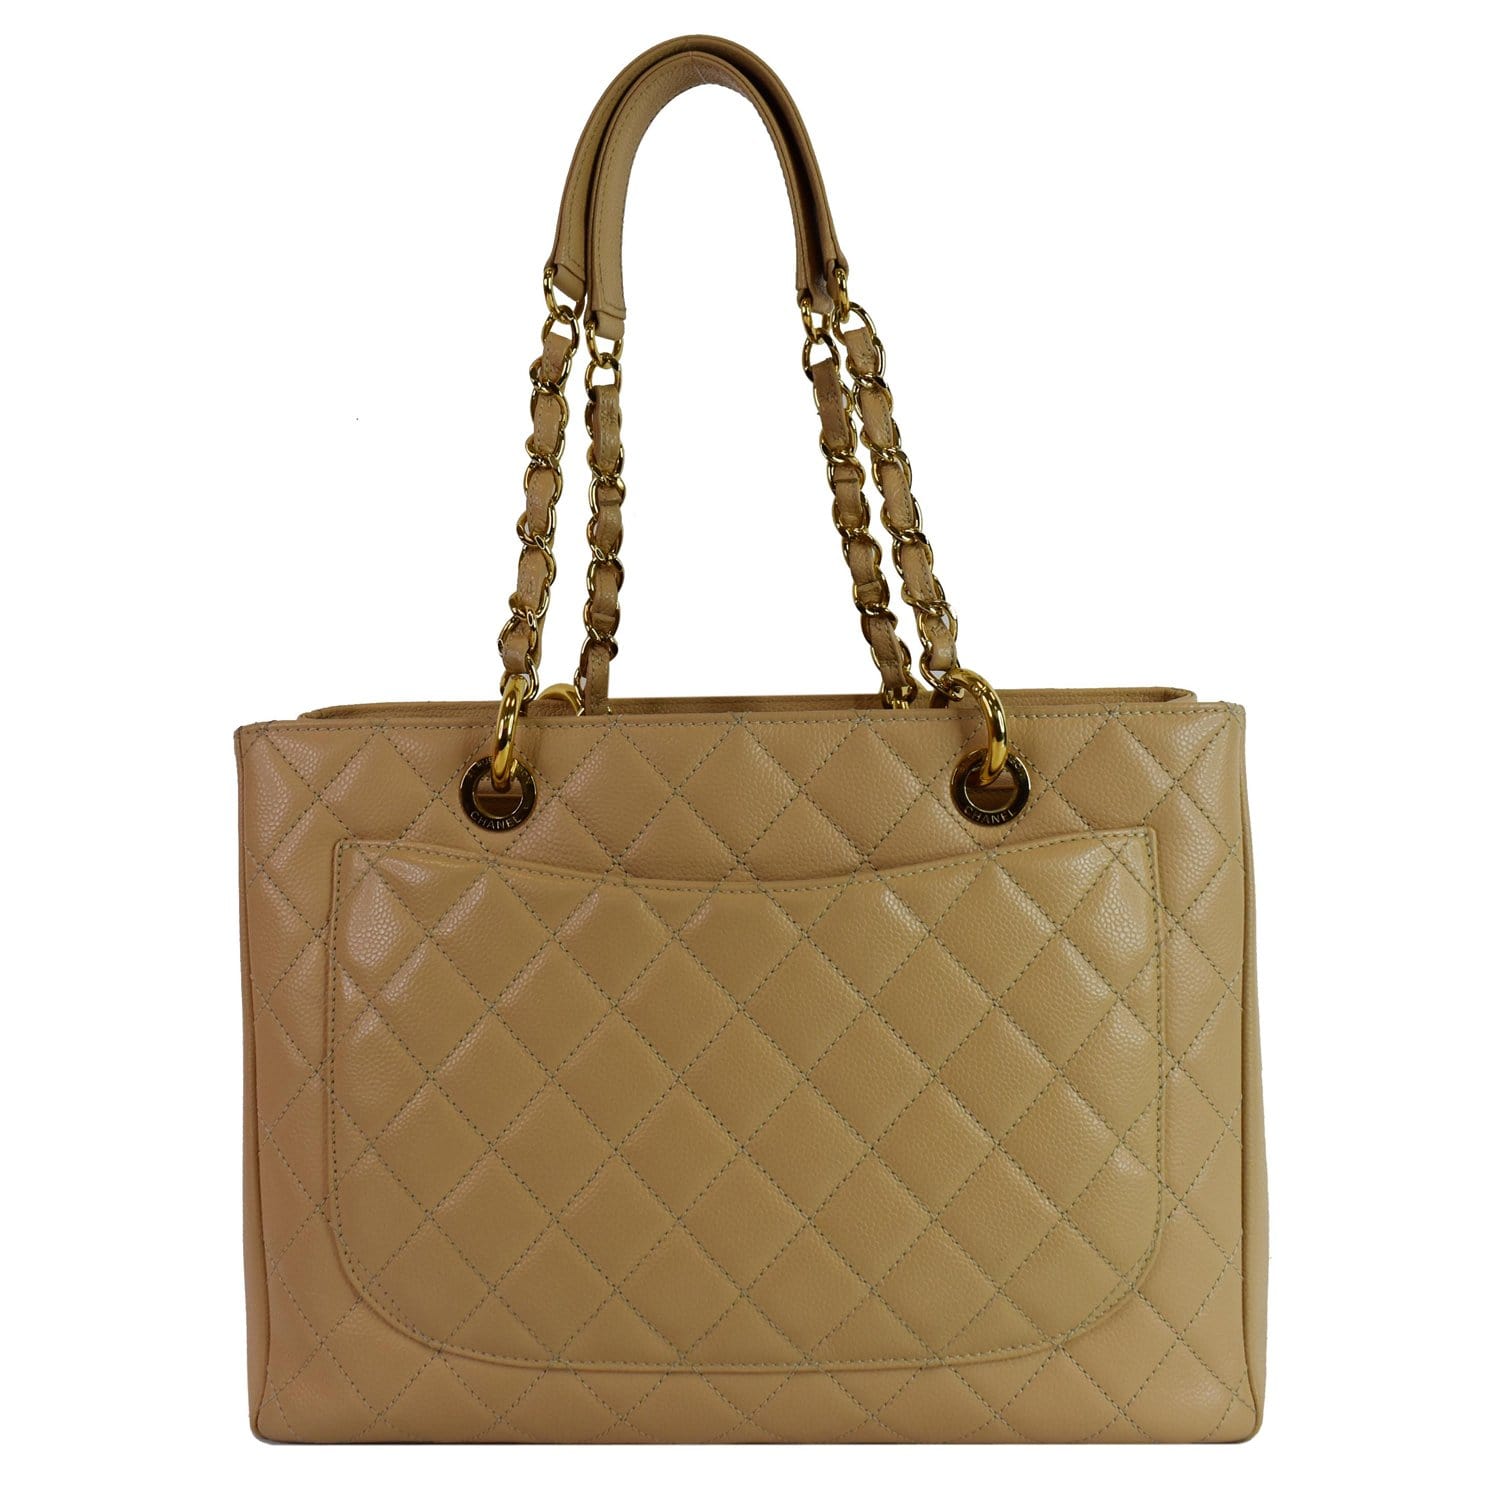 Chanel Light Pink Caviar Leather Coco Handle Handbag